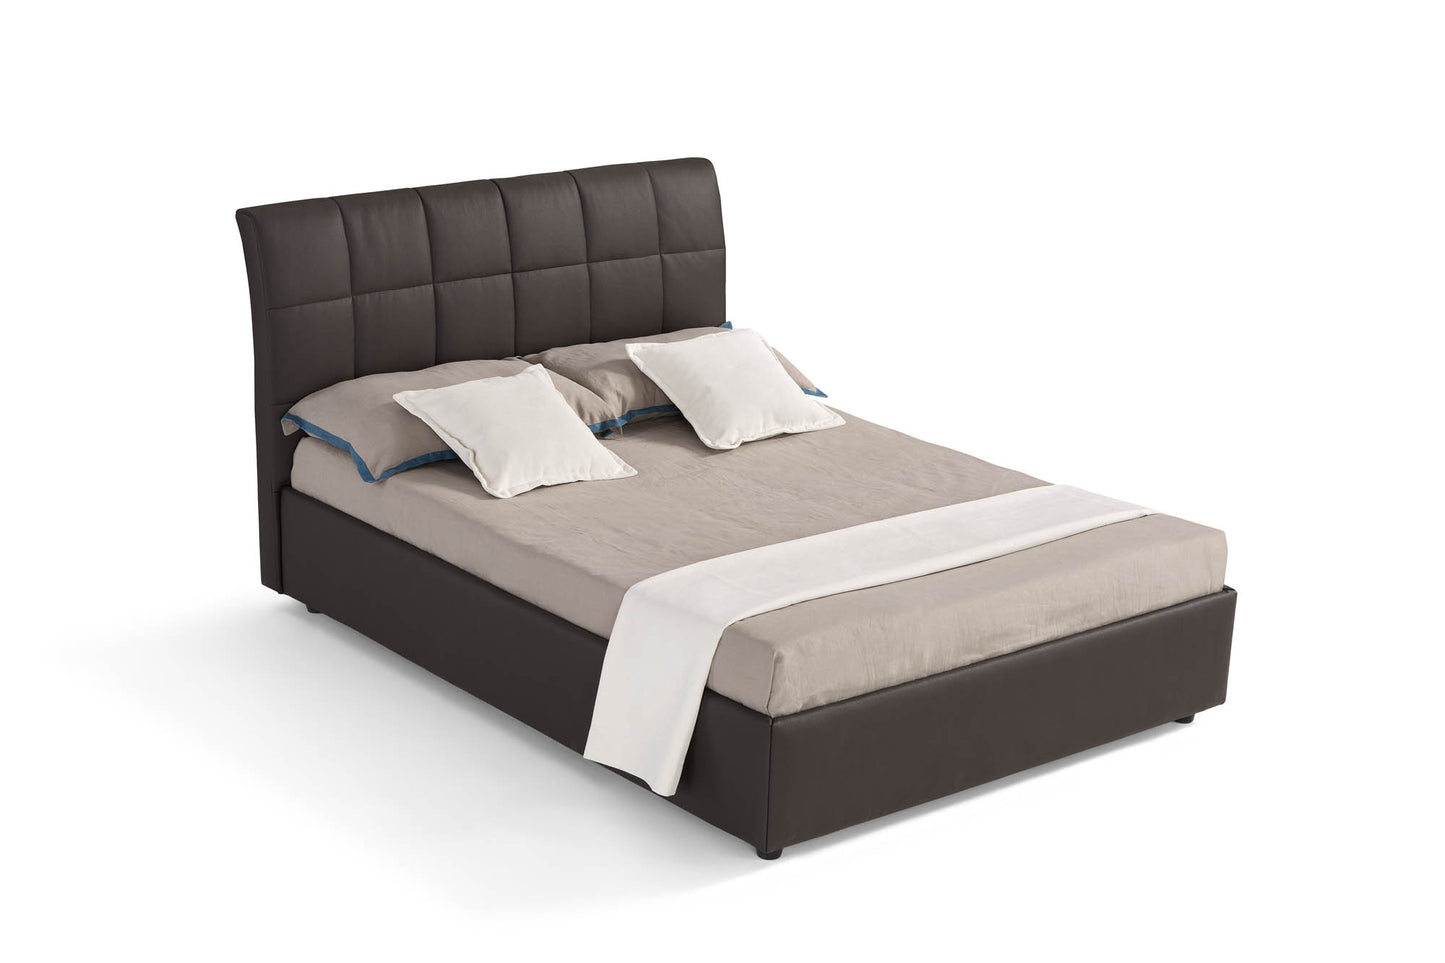 Novaluna Italy - Berlino Bed - Made in Italy